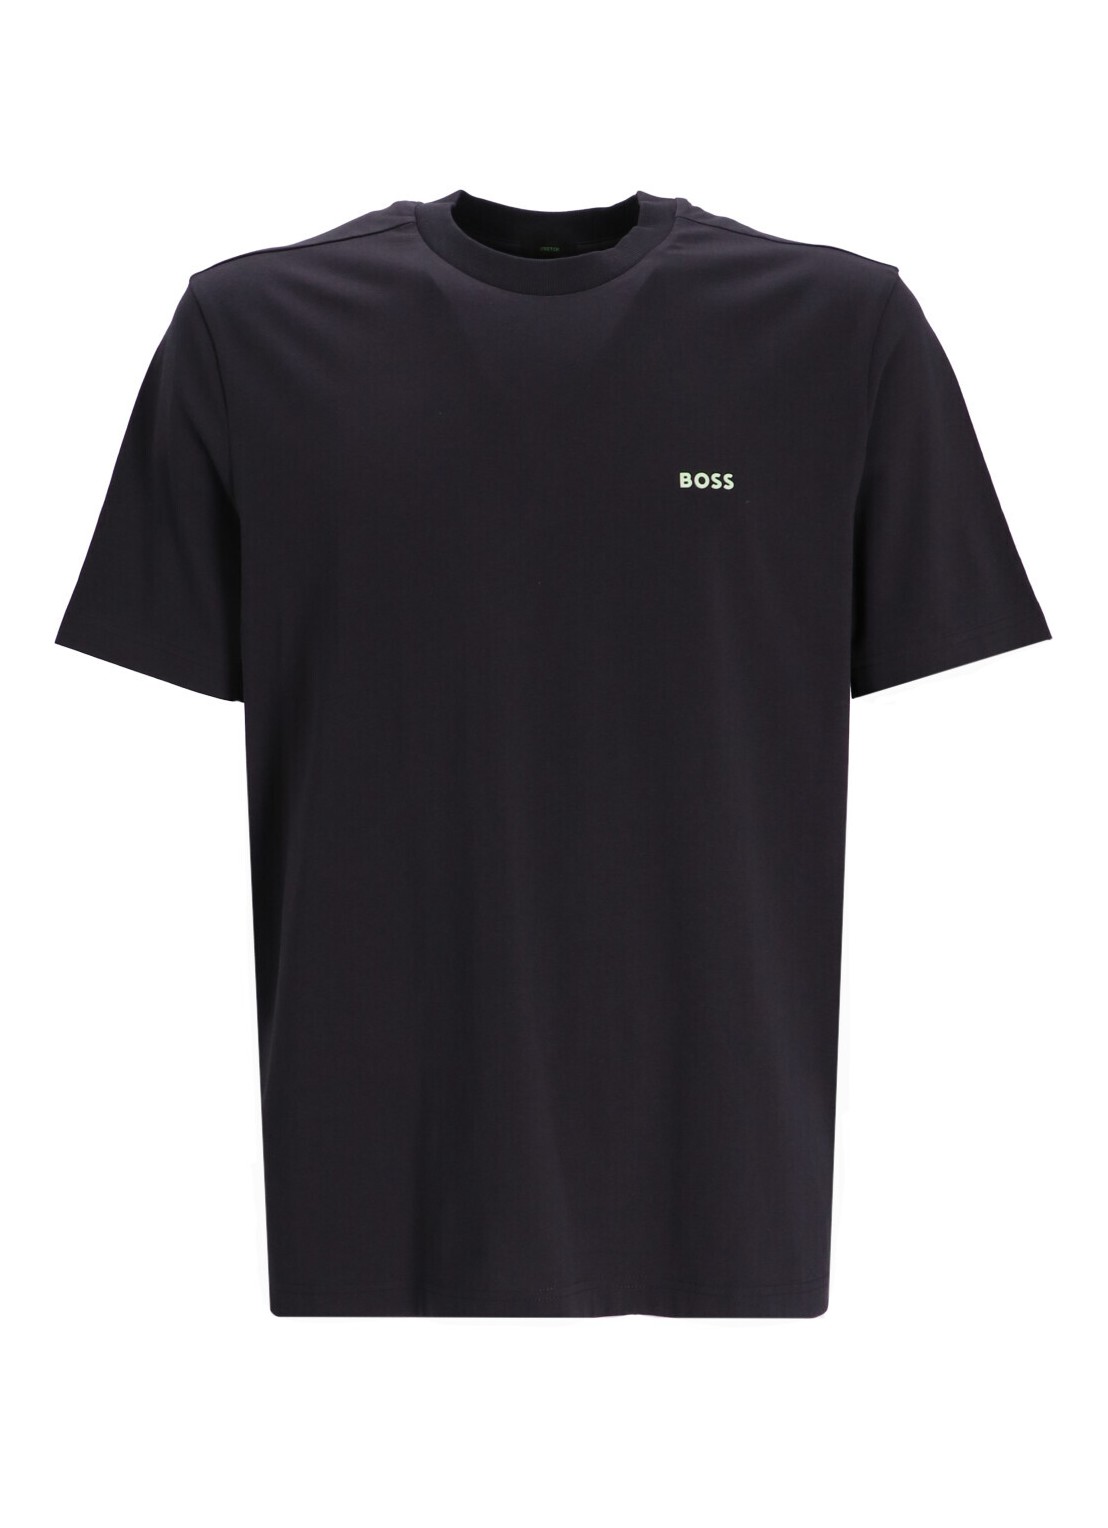 Camiseta boss t-shirt mantee - 50506373 016 talla gris
 